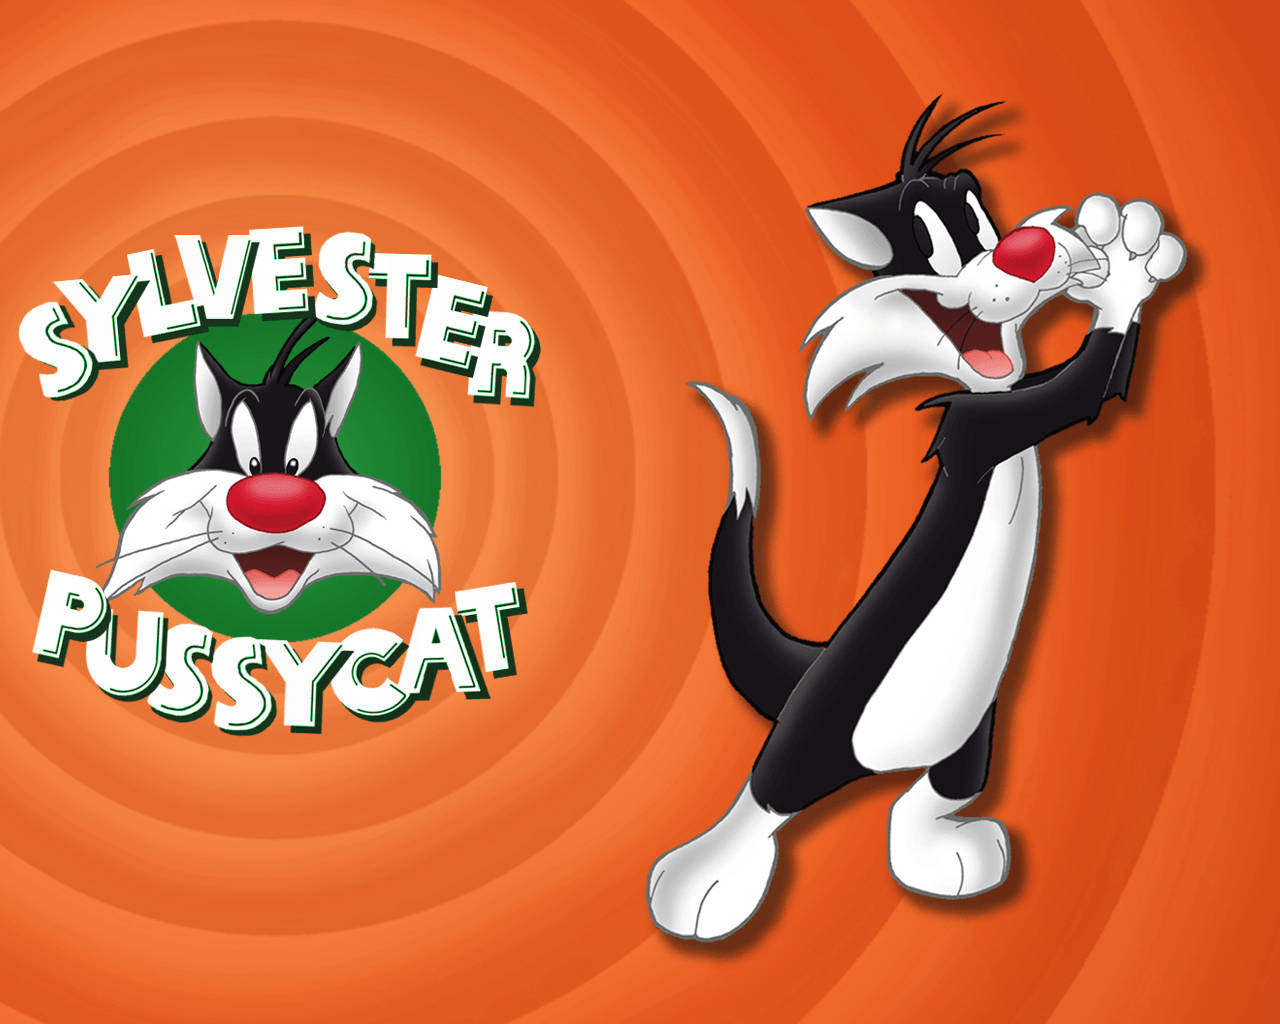 Sylvester Pussycat Artwork Wallpaper